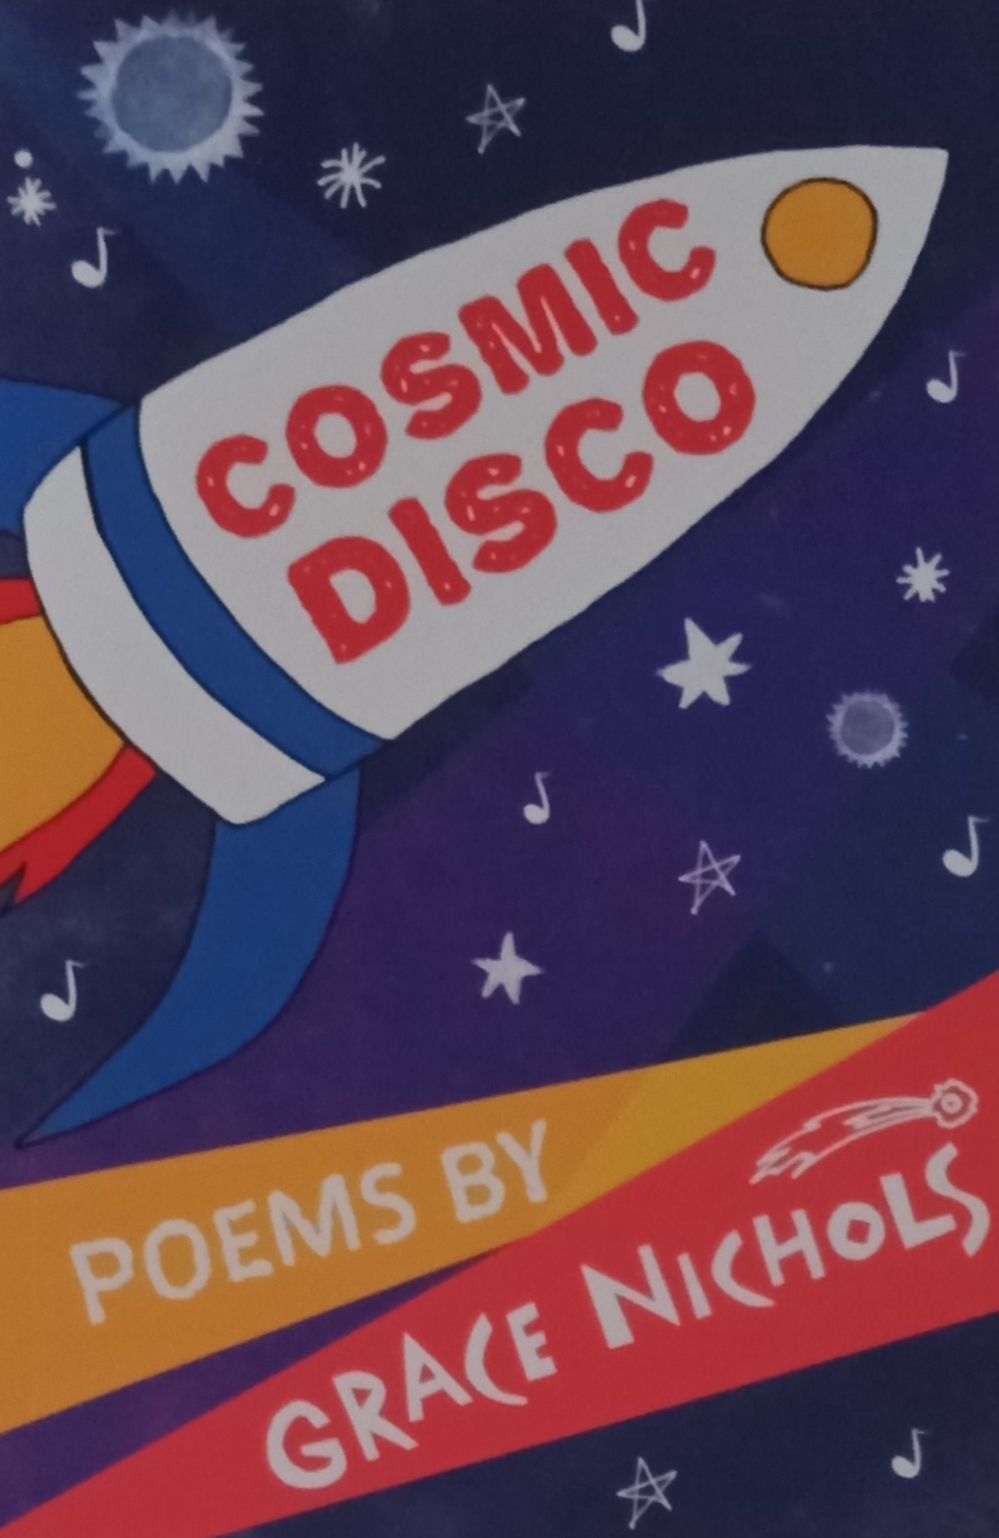 Cosmic Disco (Paperback)